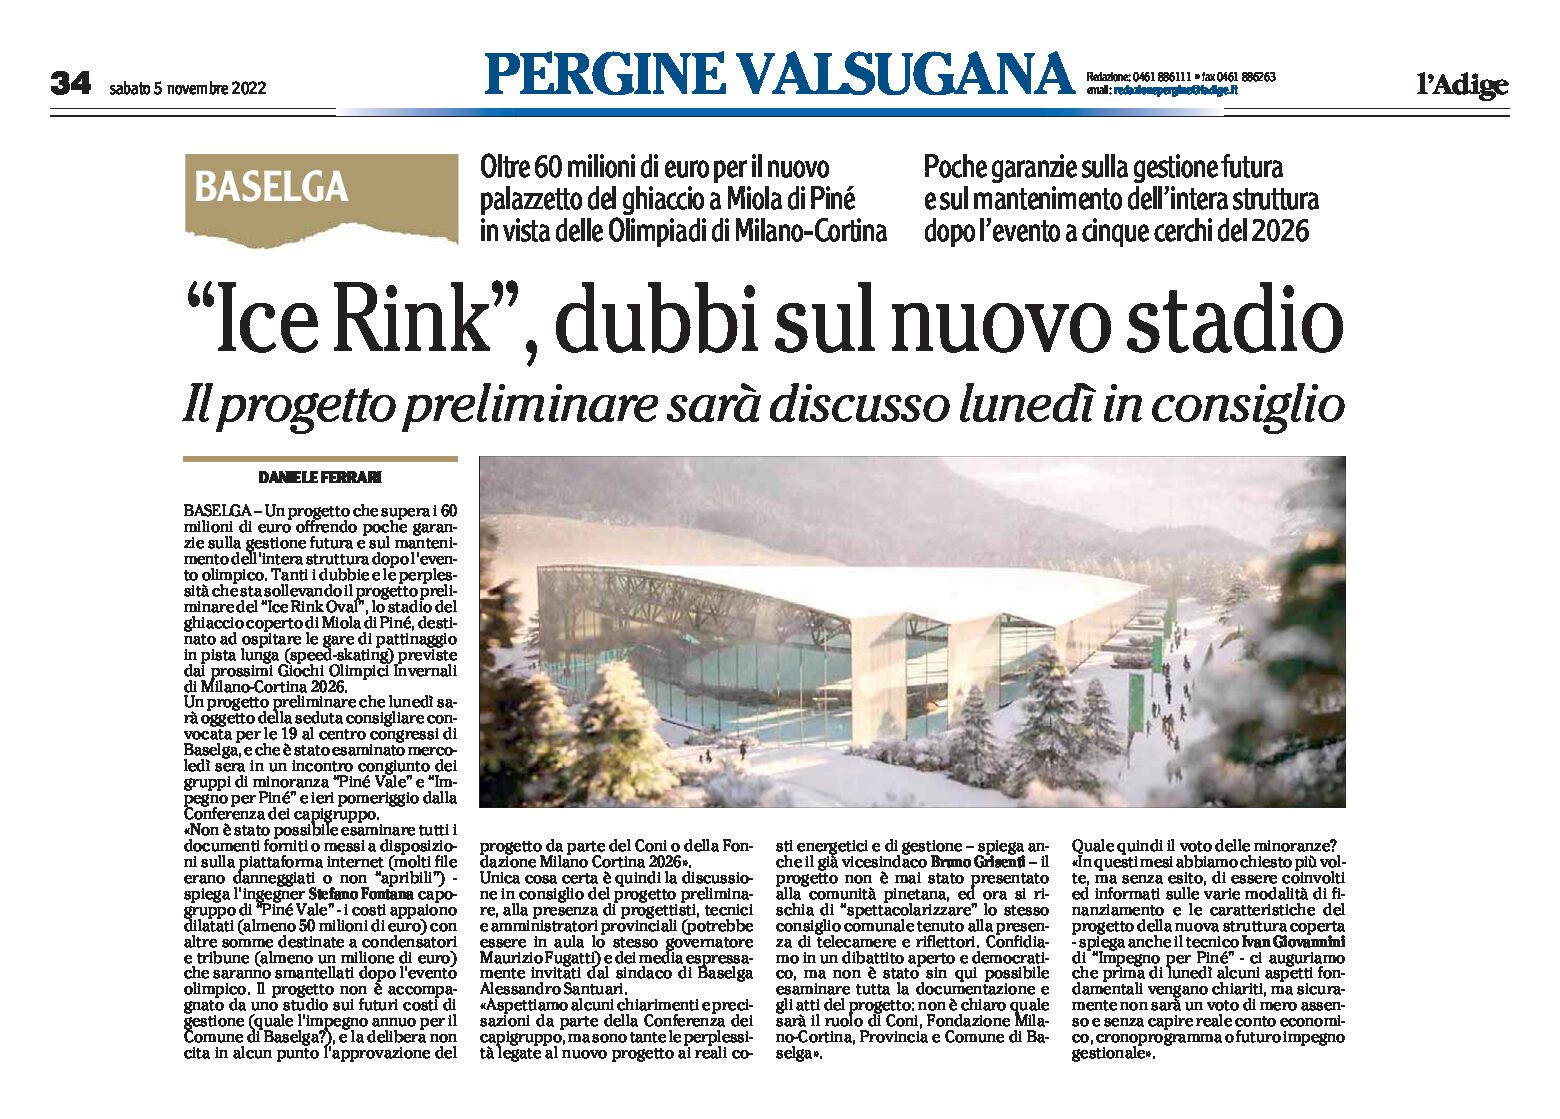 Baselga, Ice Rink: dubbi sul nuovo stadio